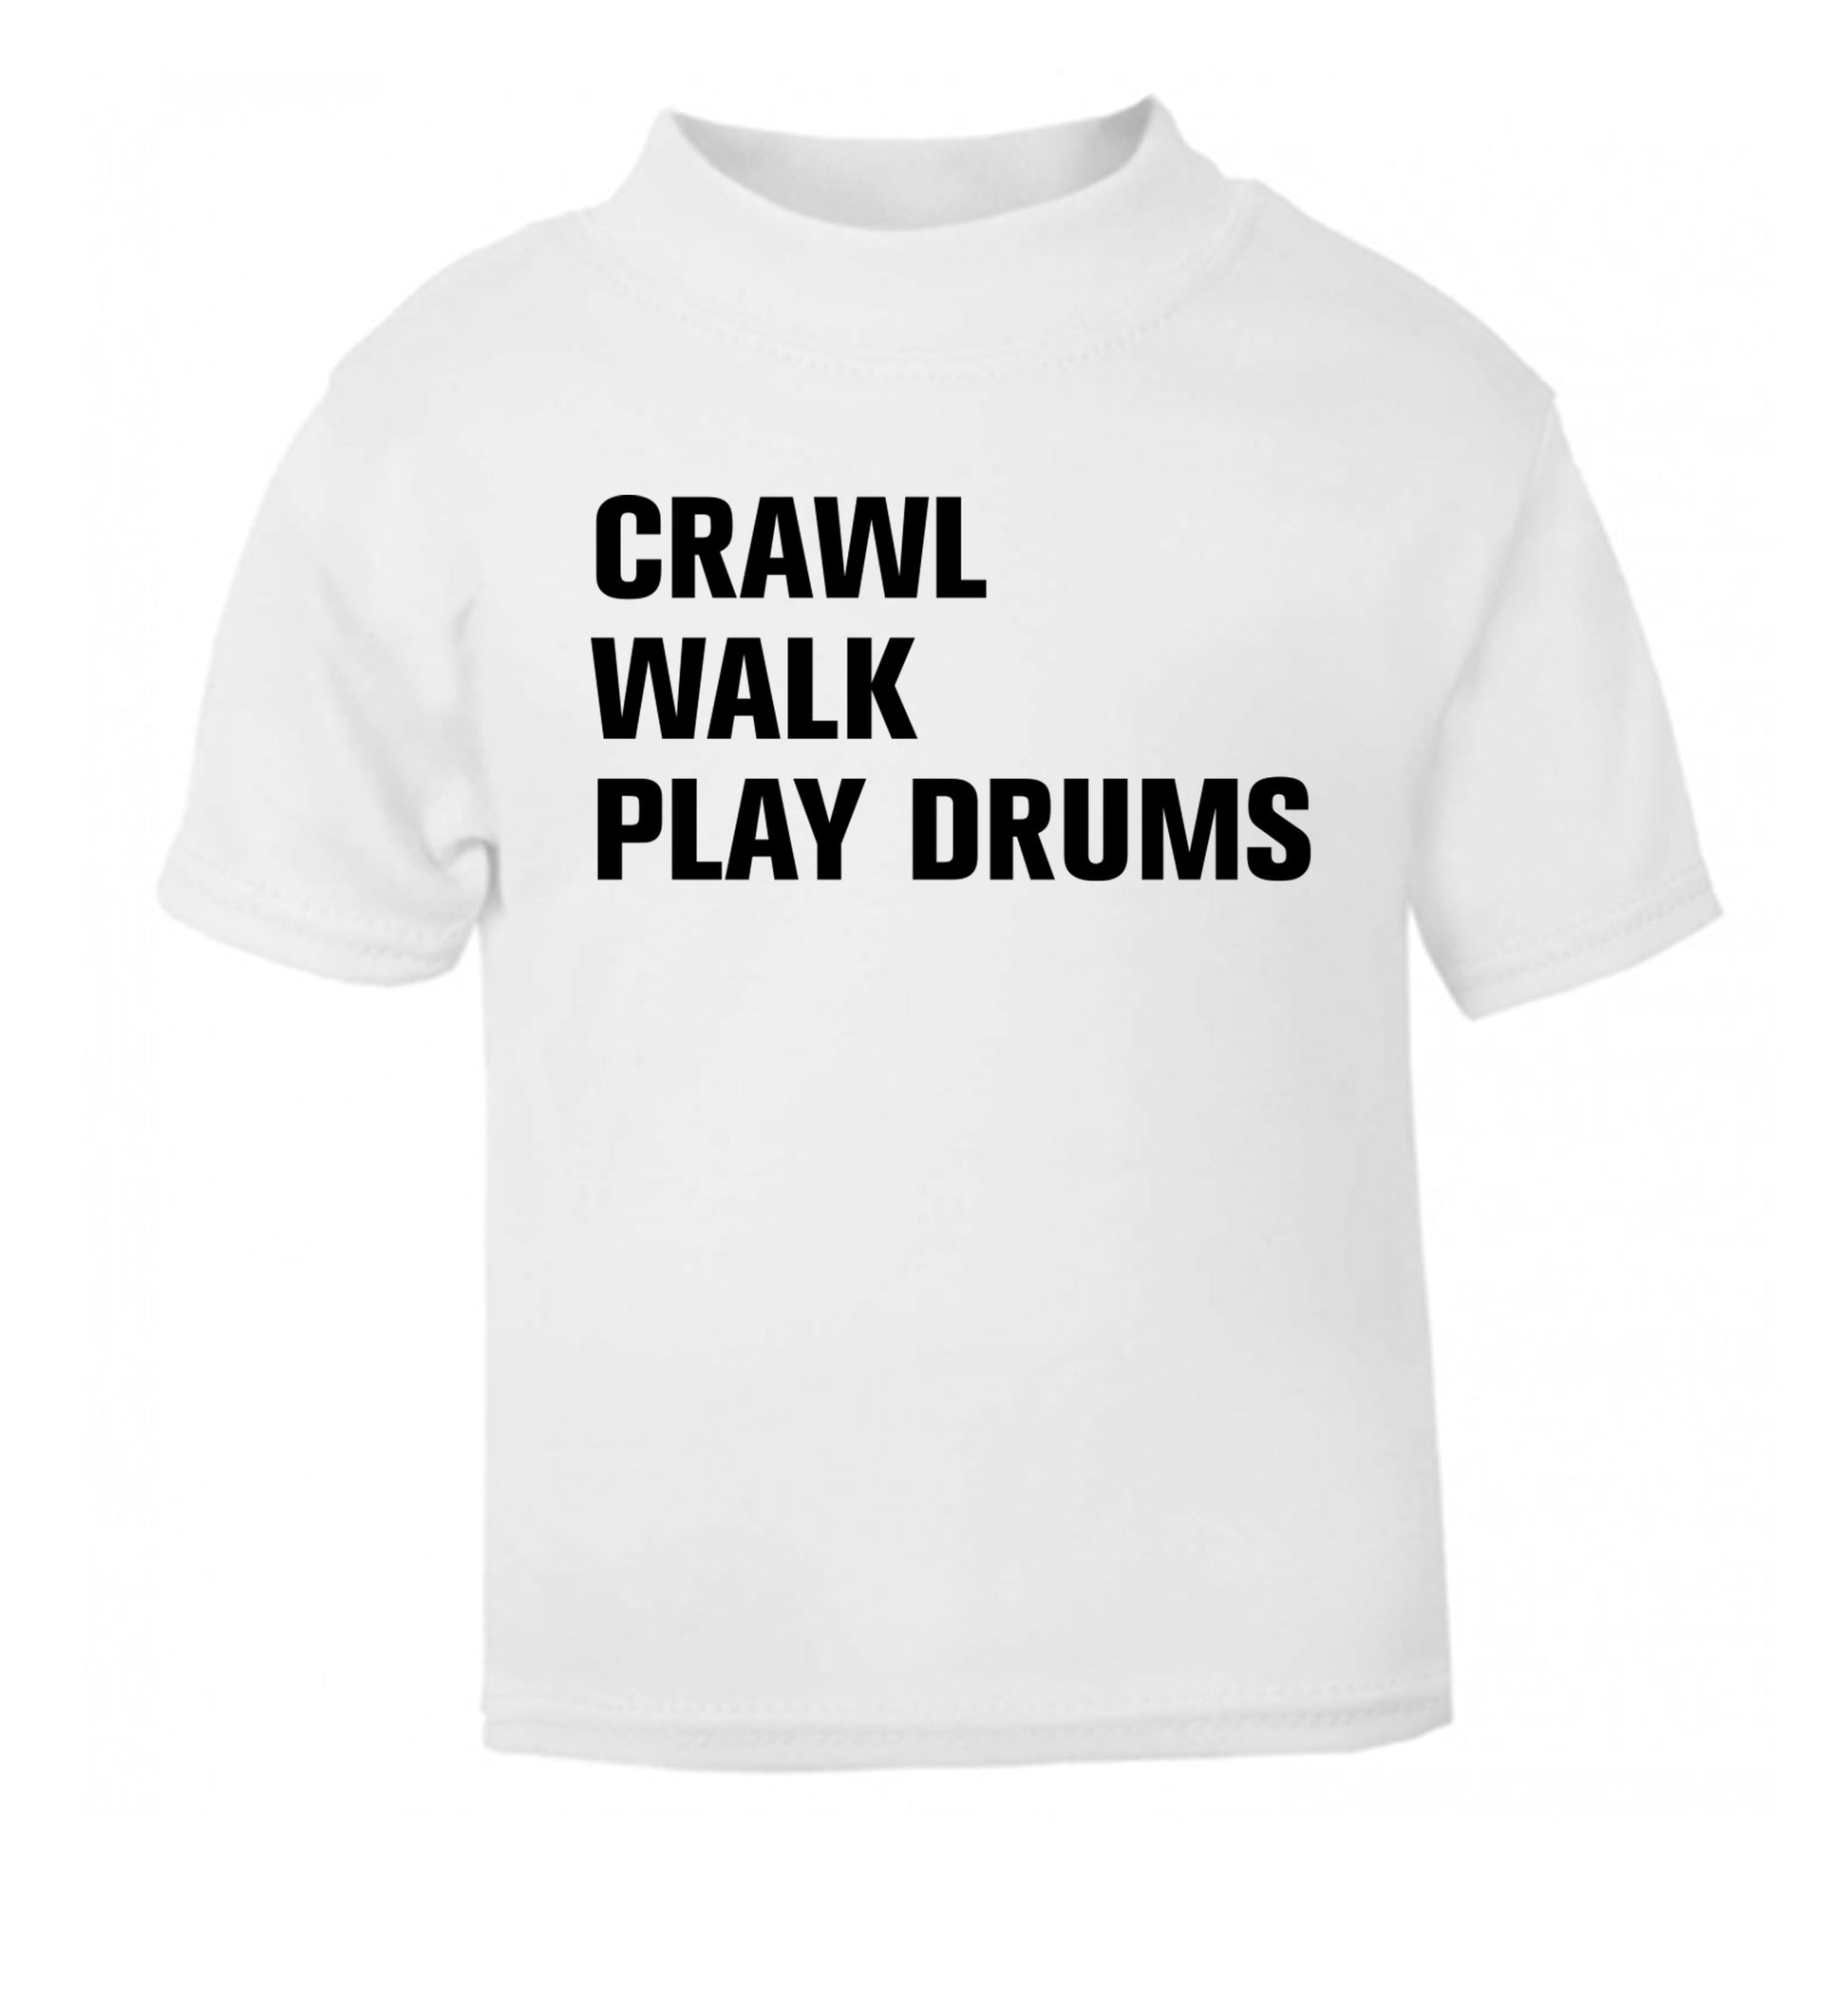 Crawl walk play drums white Baby Toddler Tshirt 2 Years